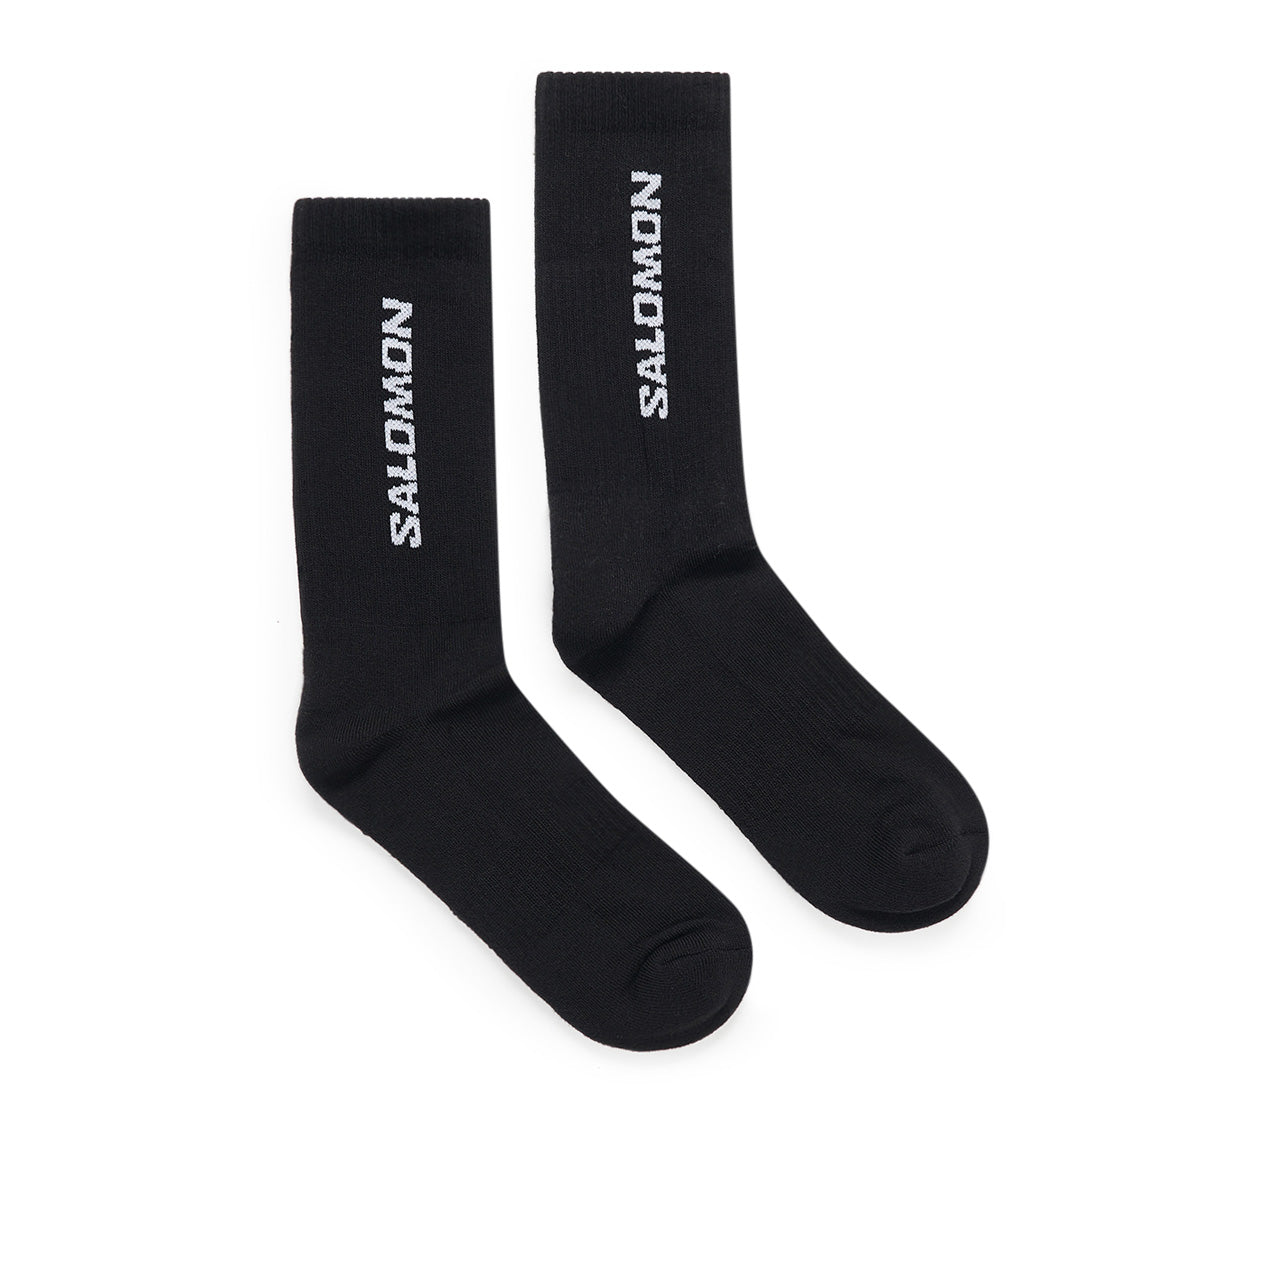 salomon socks everyday crew (black) LC2086100 - 3-pack store a.plus